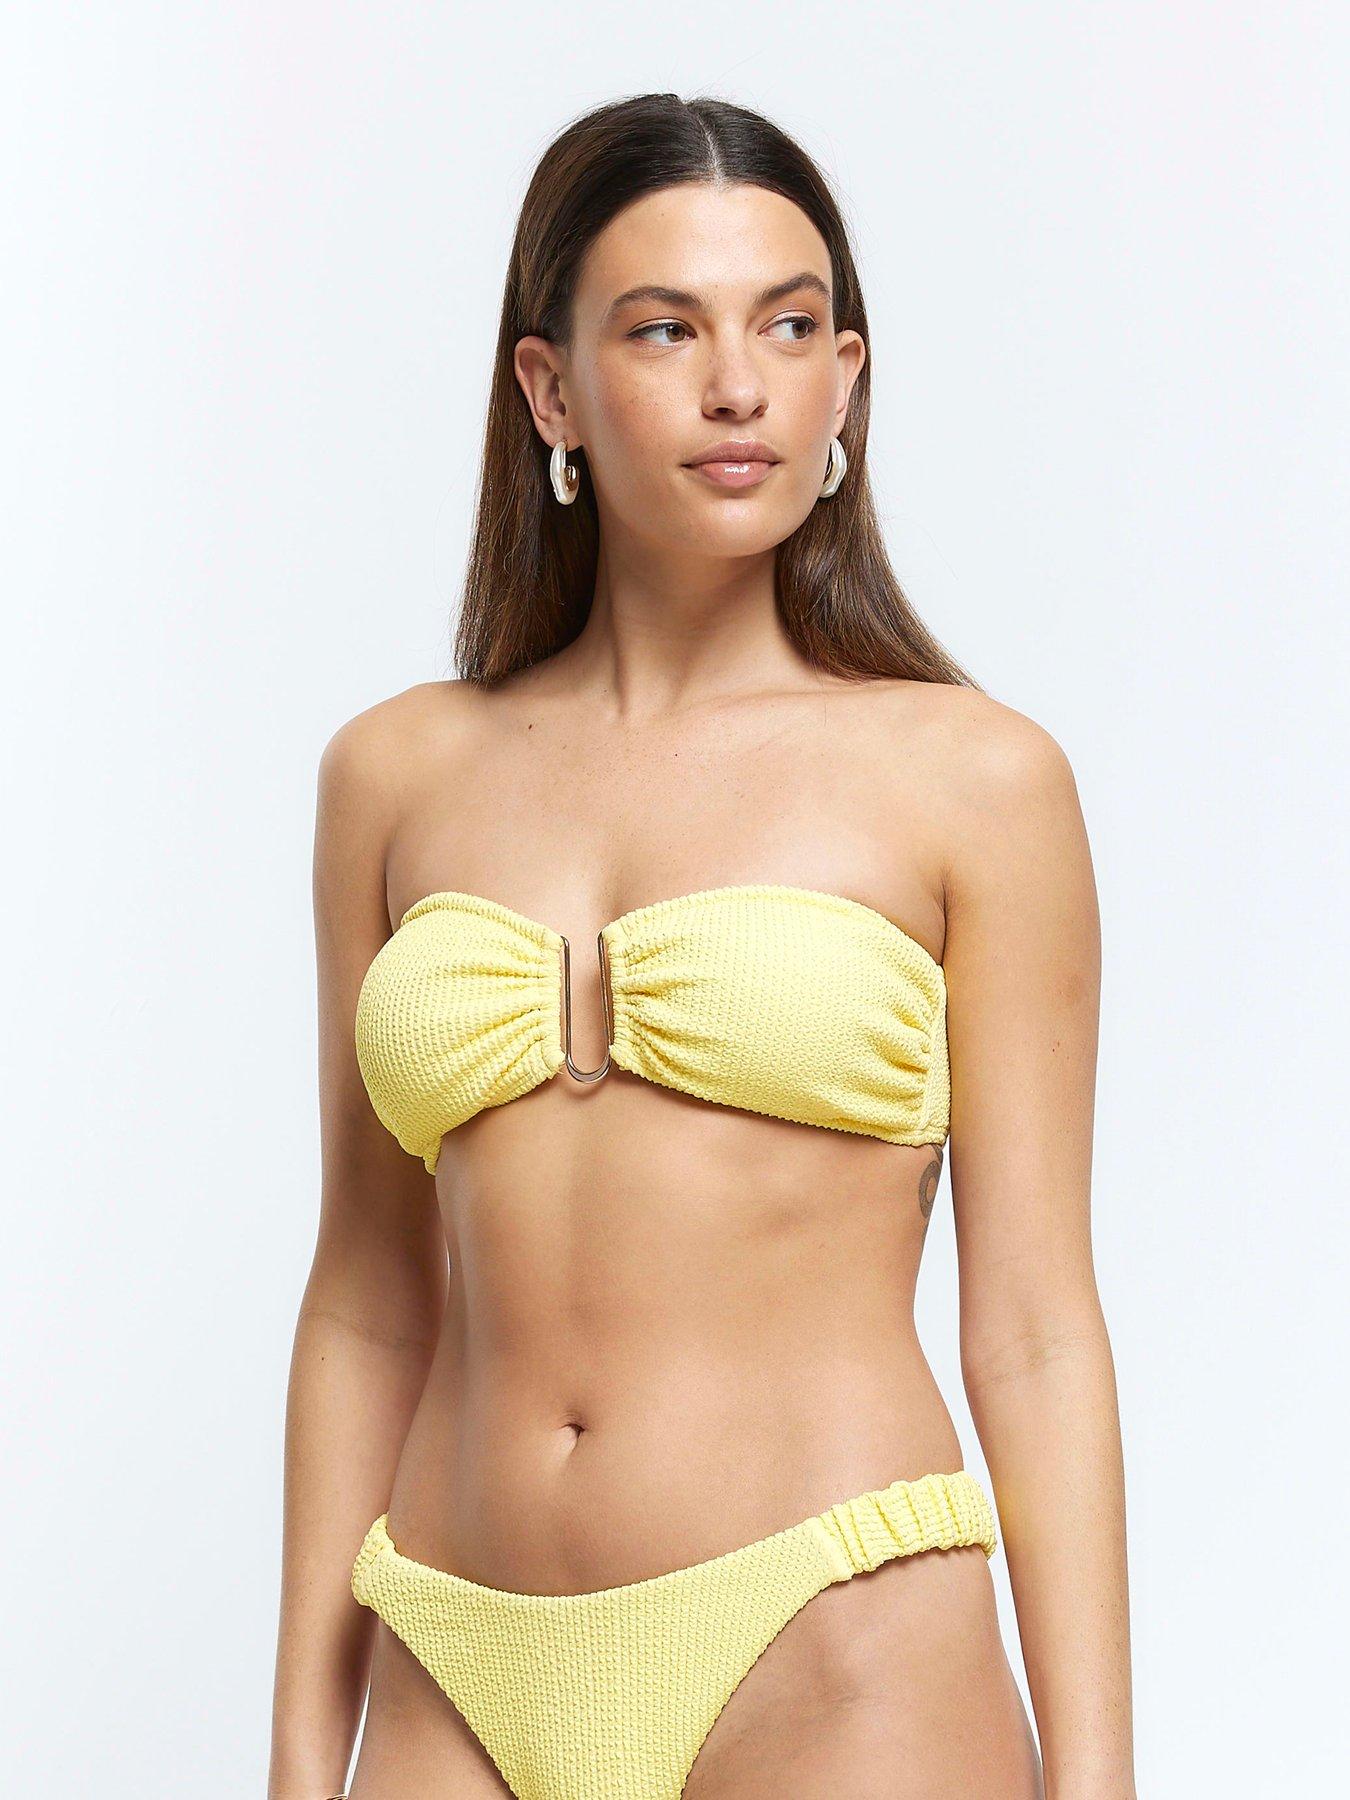 4,272 Bikini Model Teen Royalty-Free Images, Stock Photos